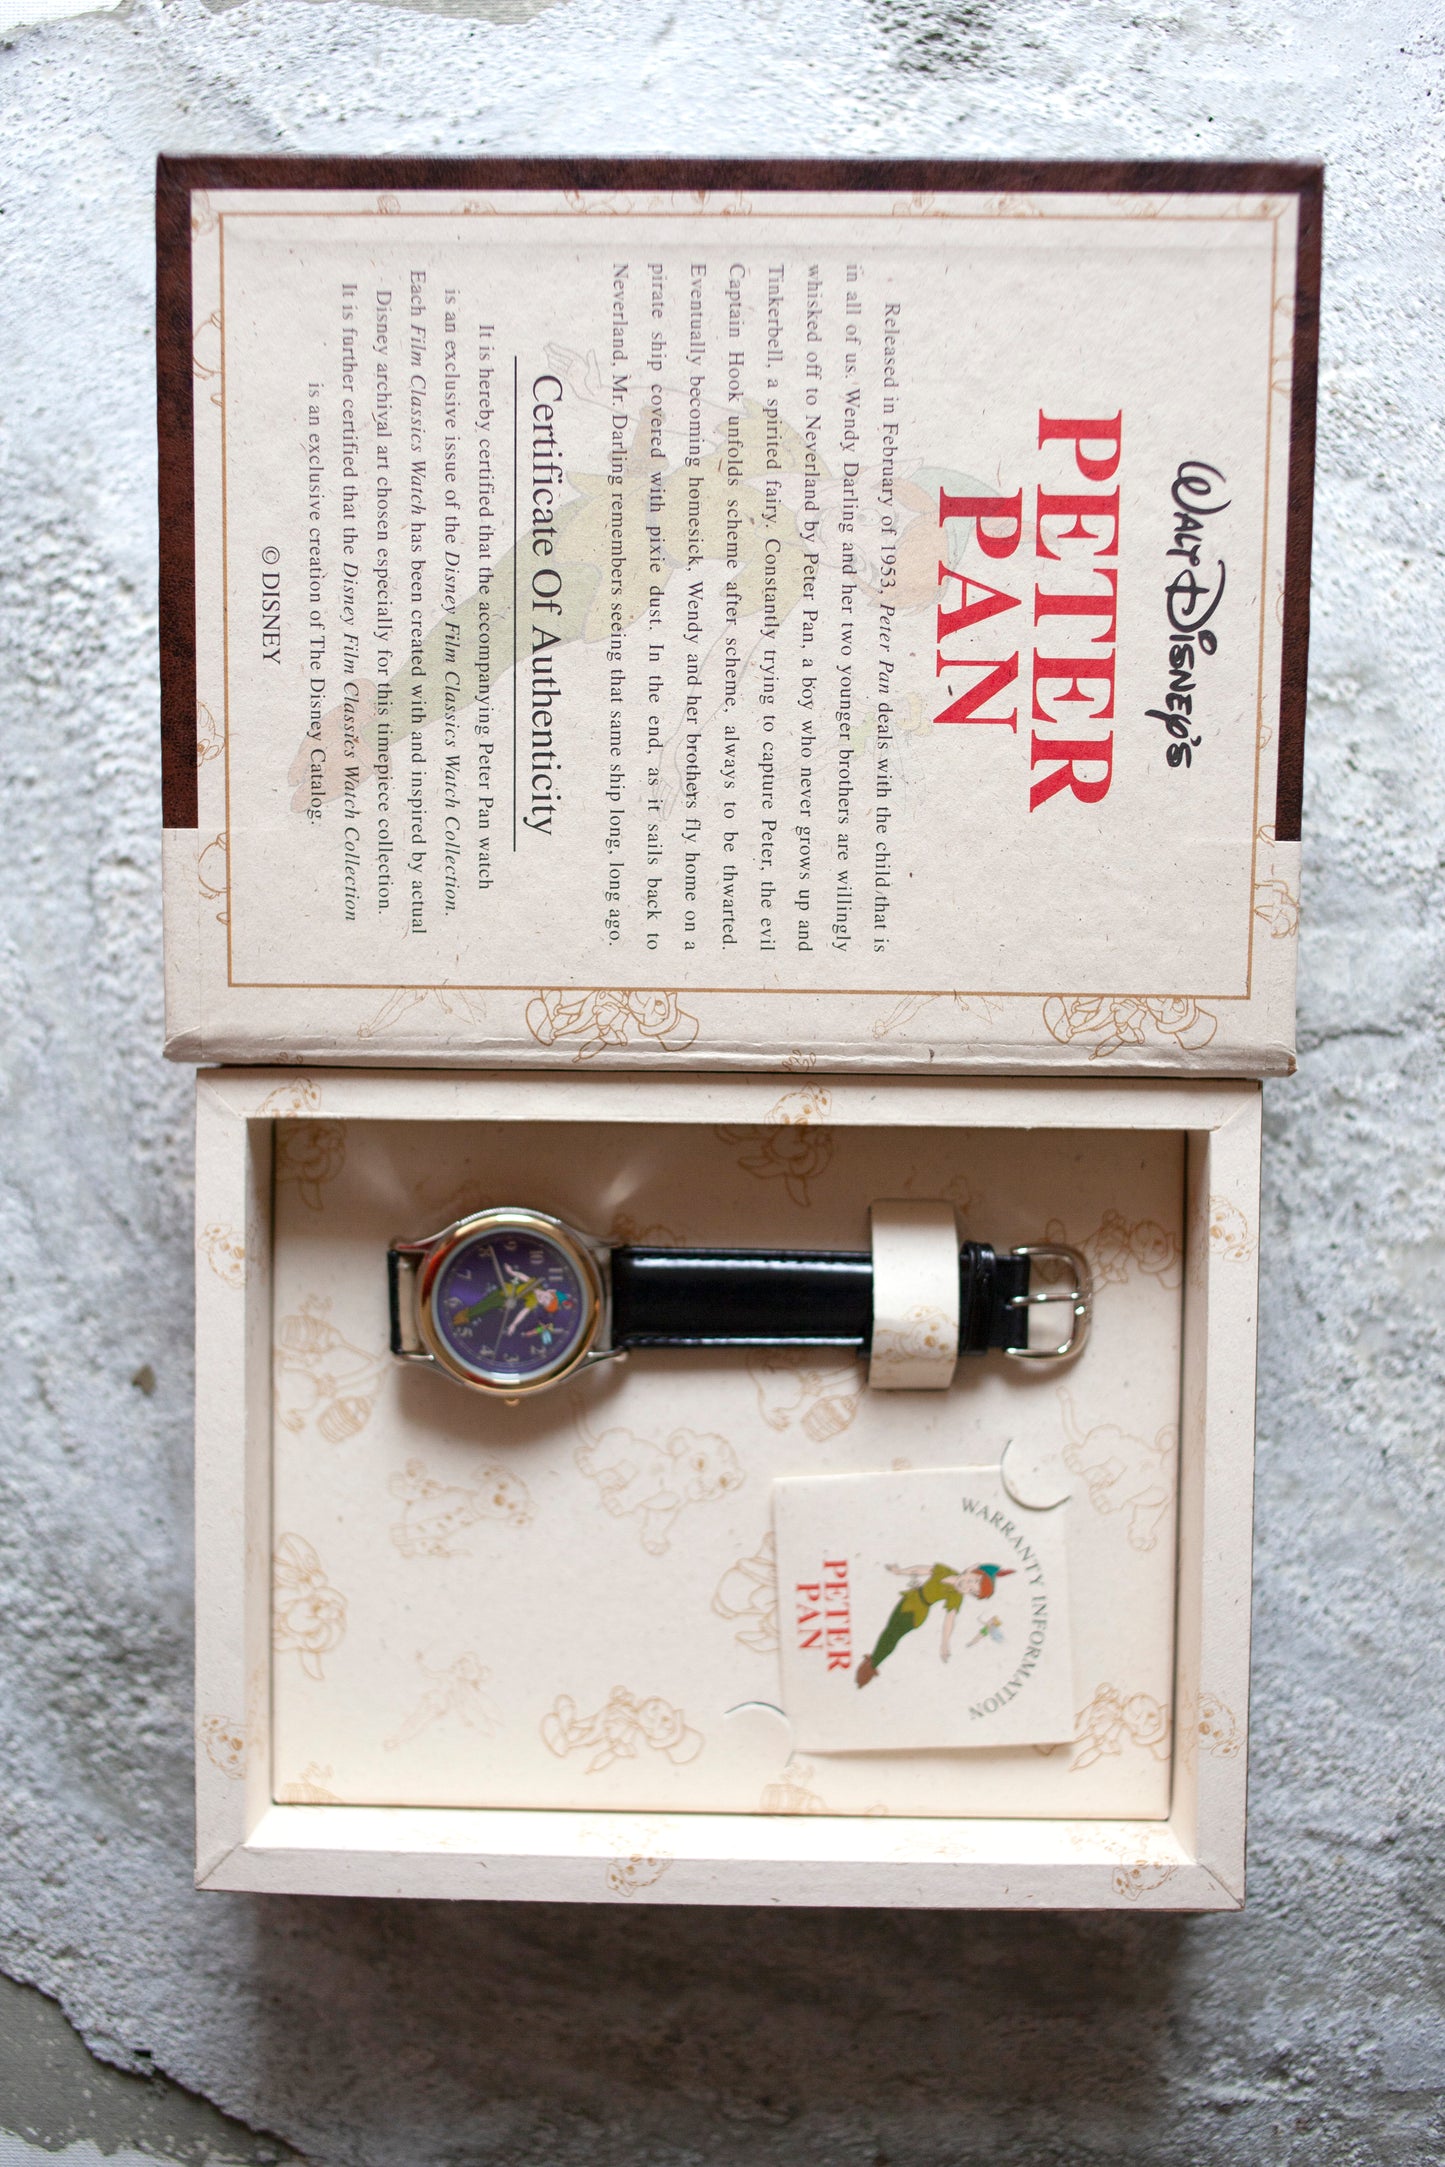 Premium Vintage: Peter Pan's Tome